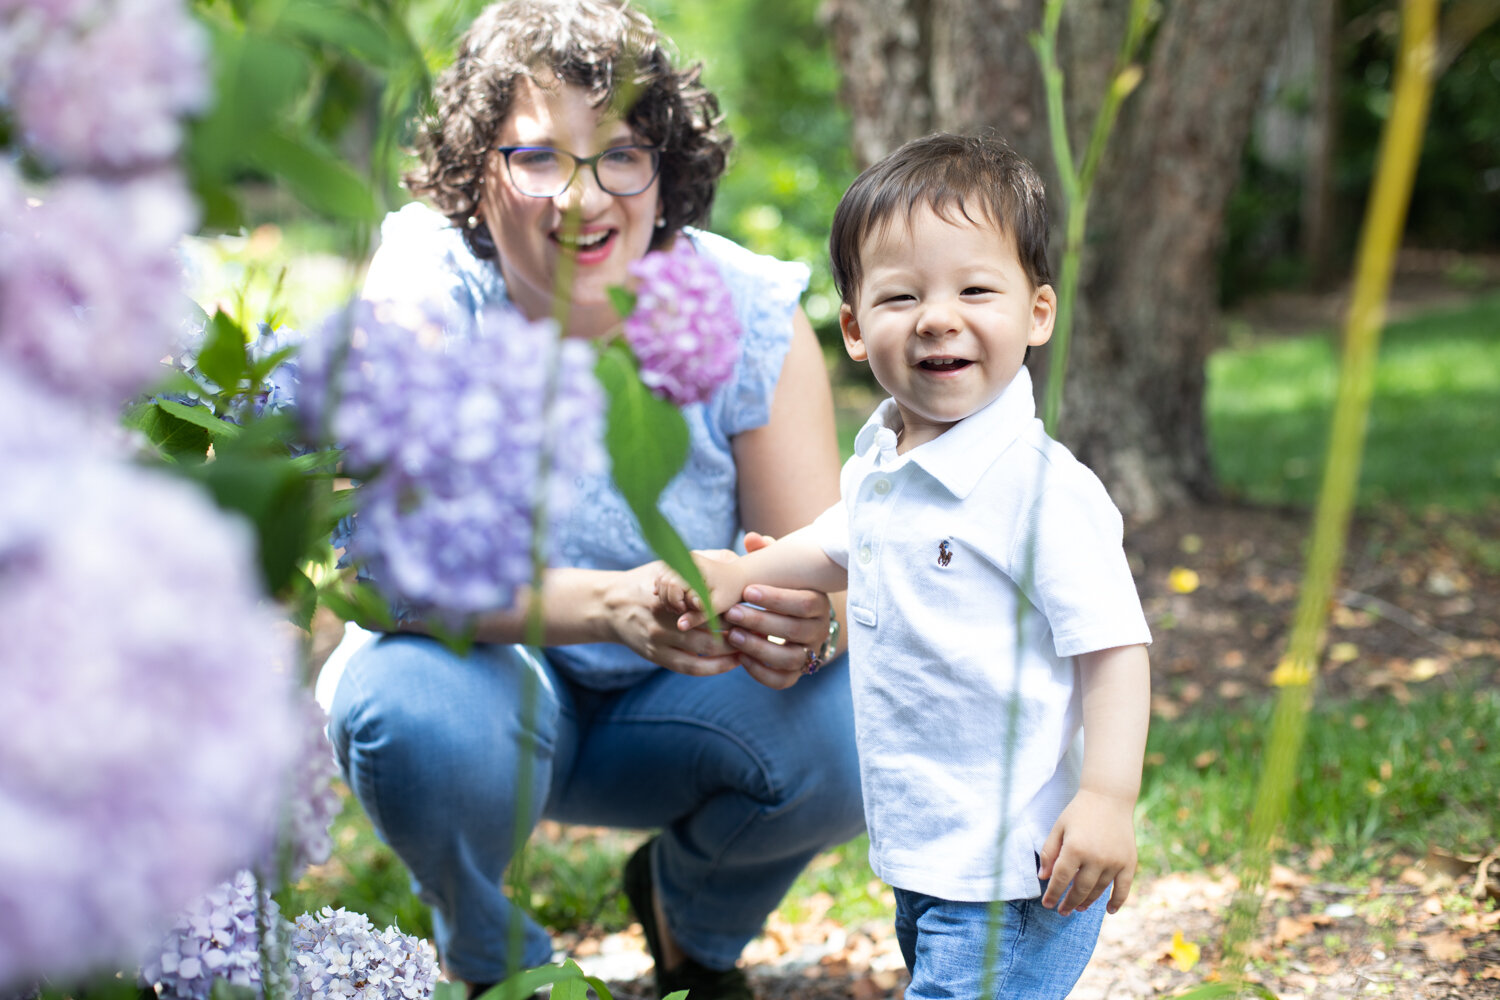 Little boy squinty smile with mom at purple hydrangea bush in backyard